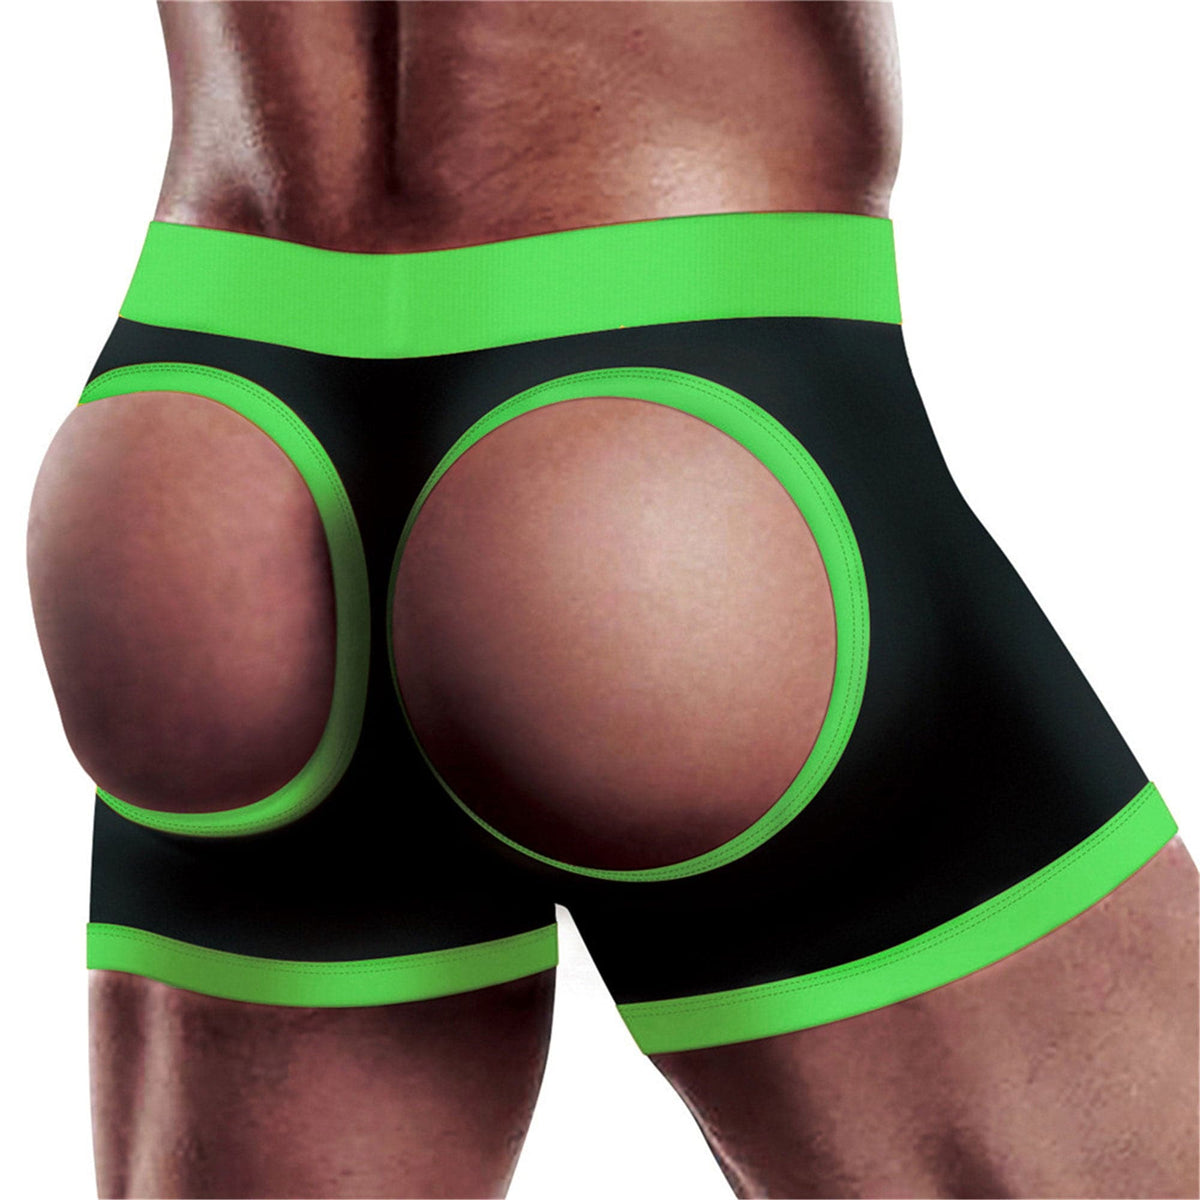 get lucky strap on boxer shorts medium large black green